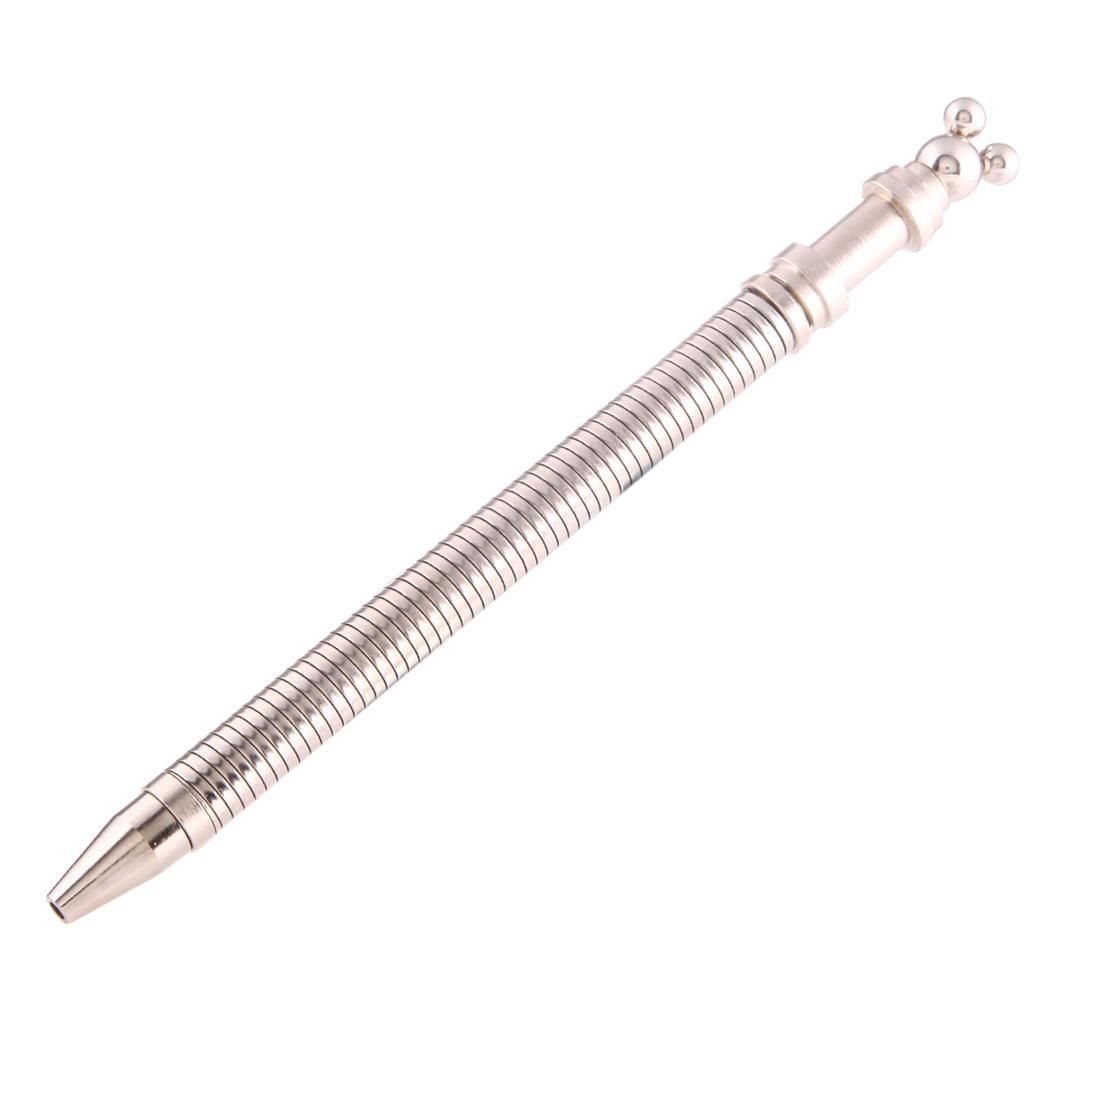 Magnetic Think Ink Pen Finger Fidget Pencil Toys Metal Pen, without Refill